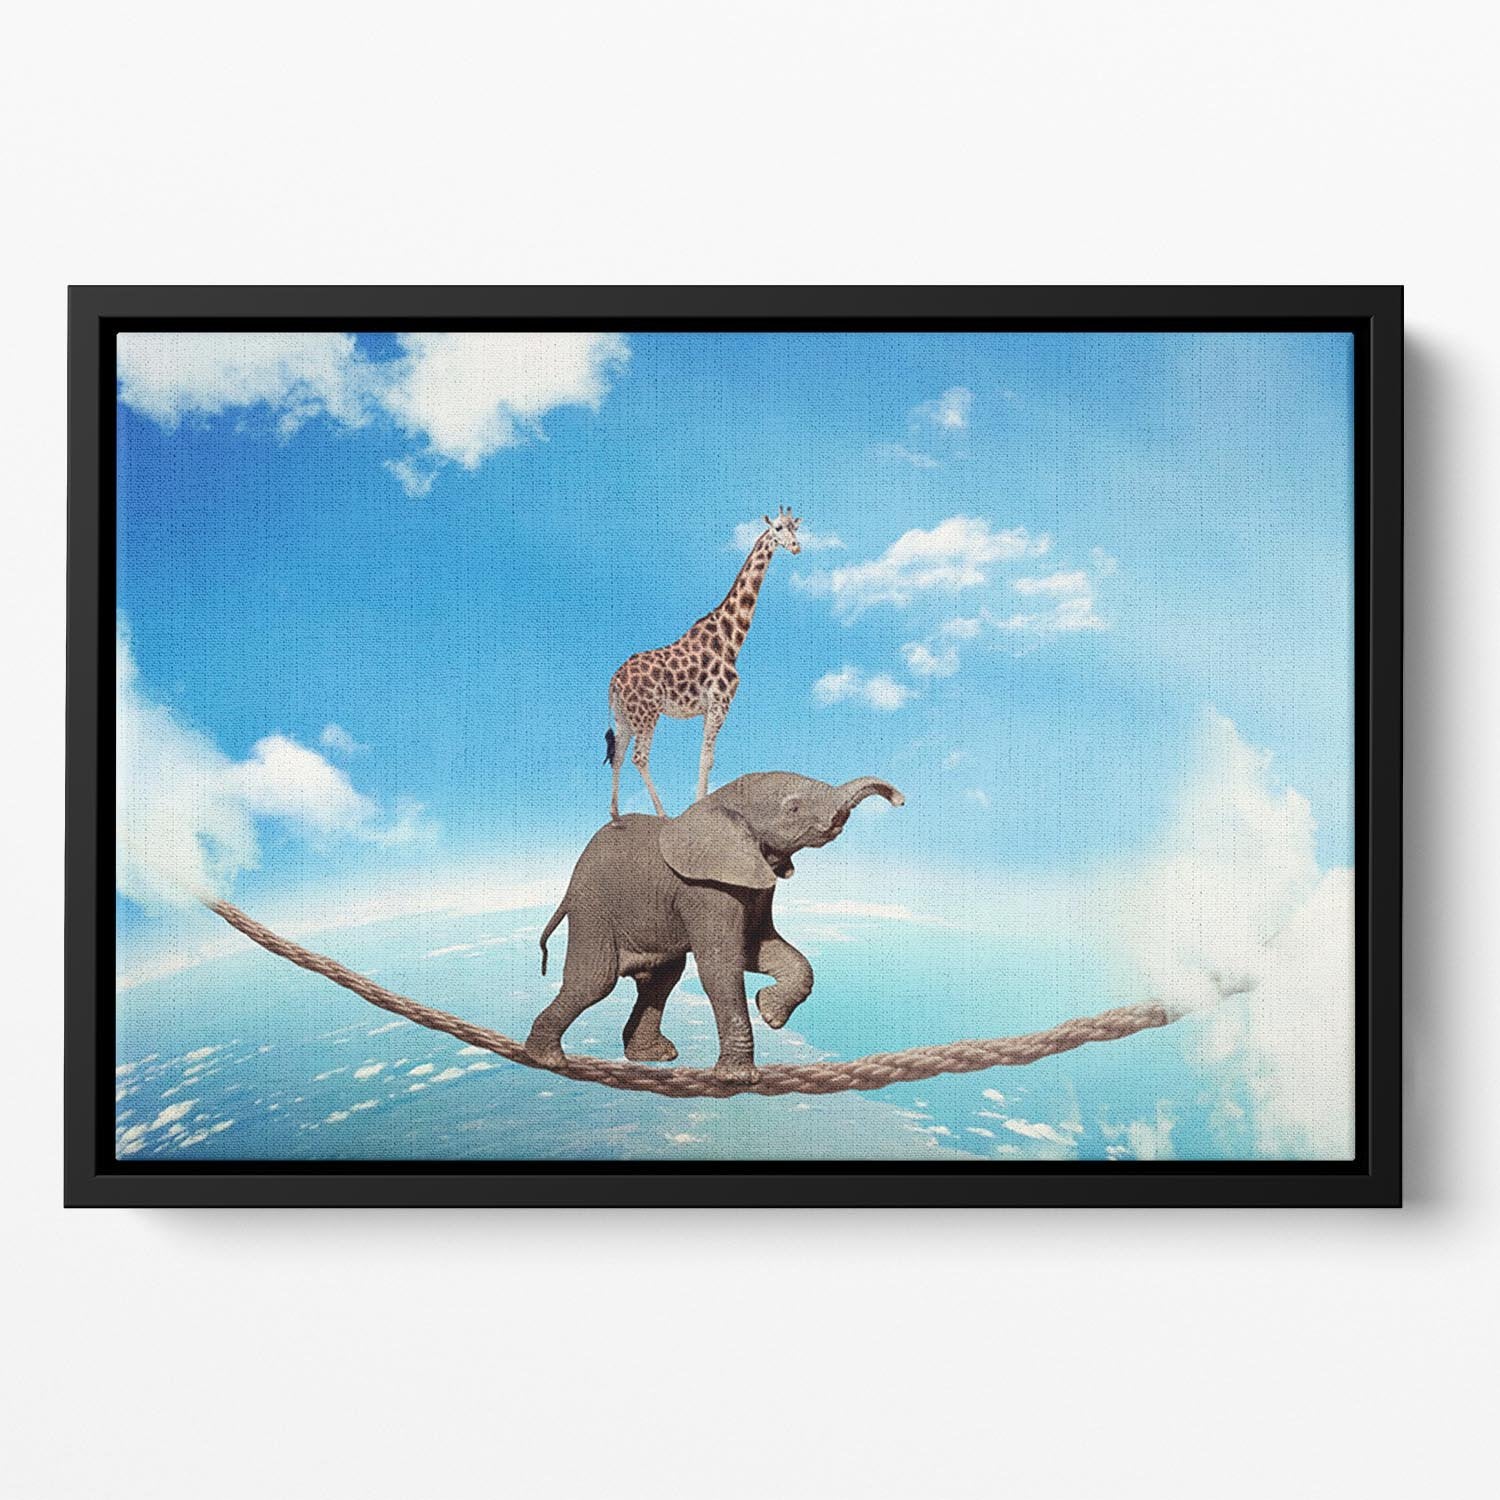 Elephant with giraffe walking on dangerous rope high in sky Floating Framed Canvas - Canvas Art Rocks - 2